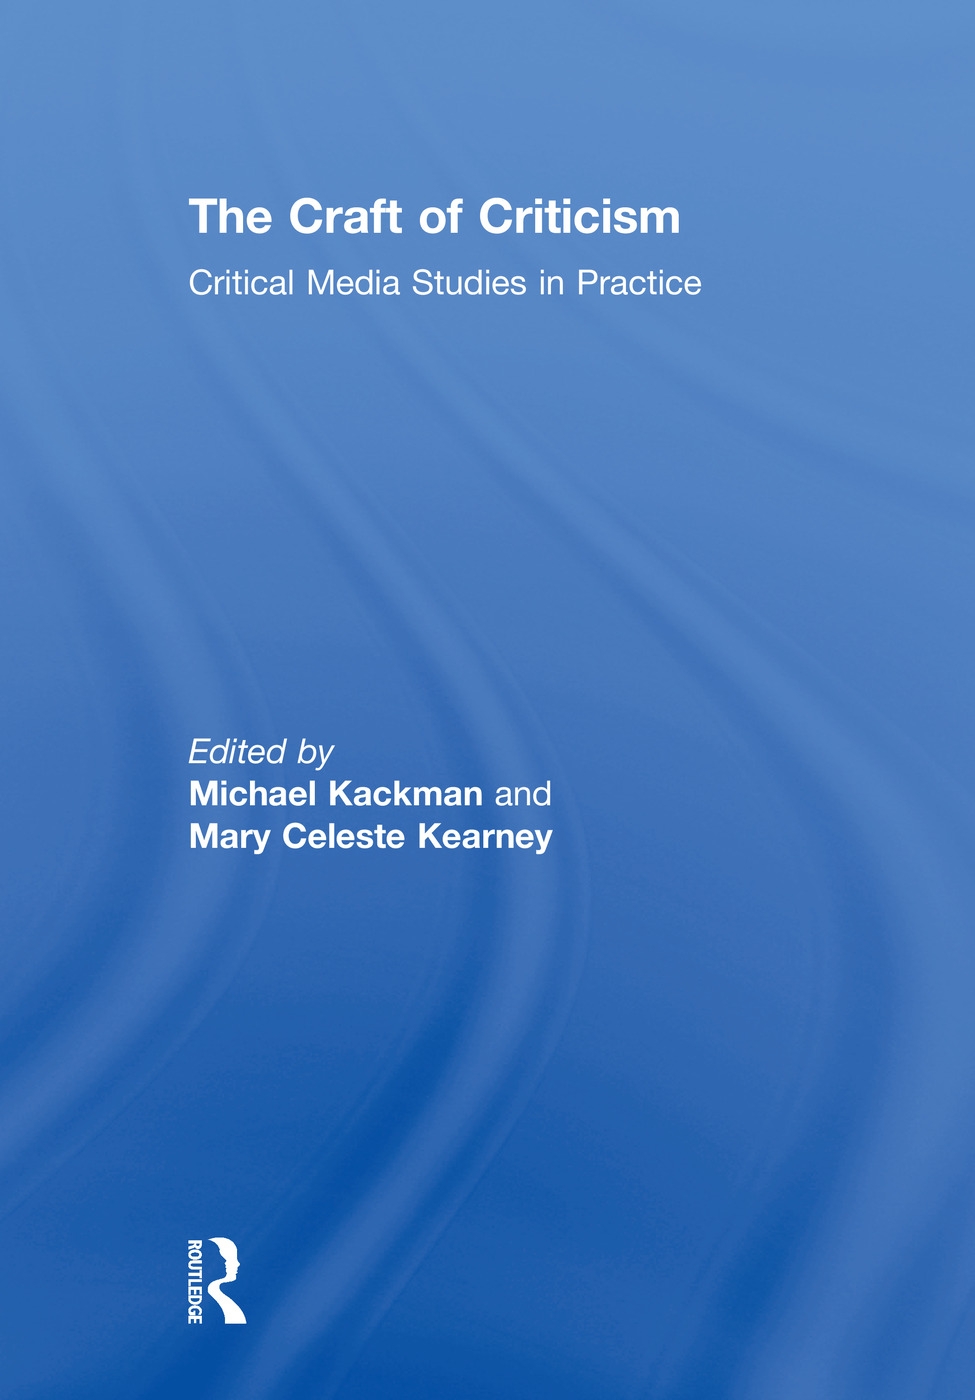 The Craft of Criticism: Critical Media Studies in Practice